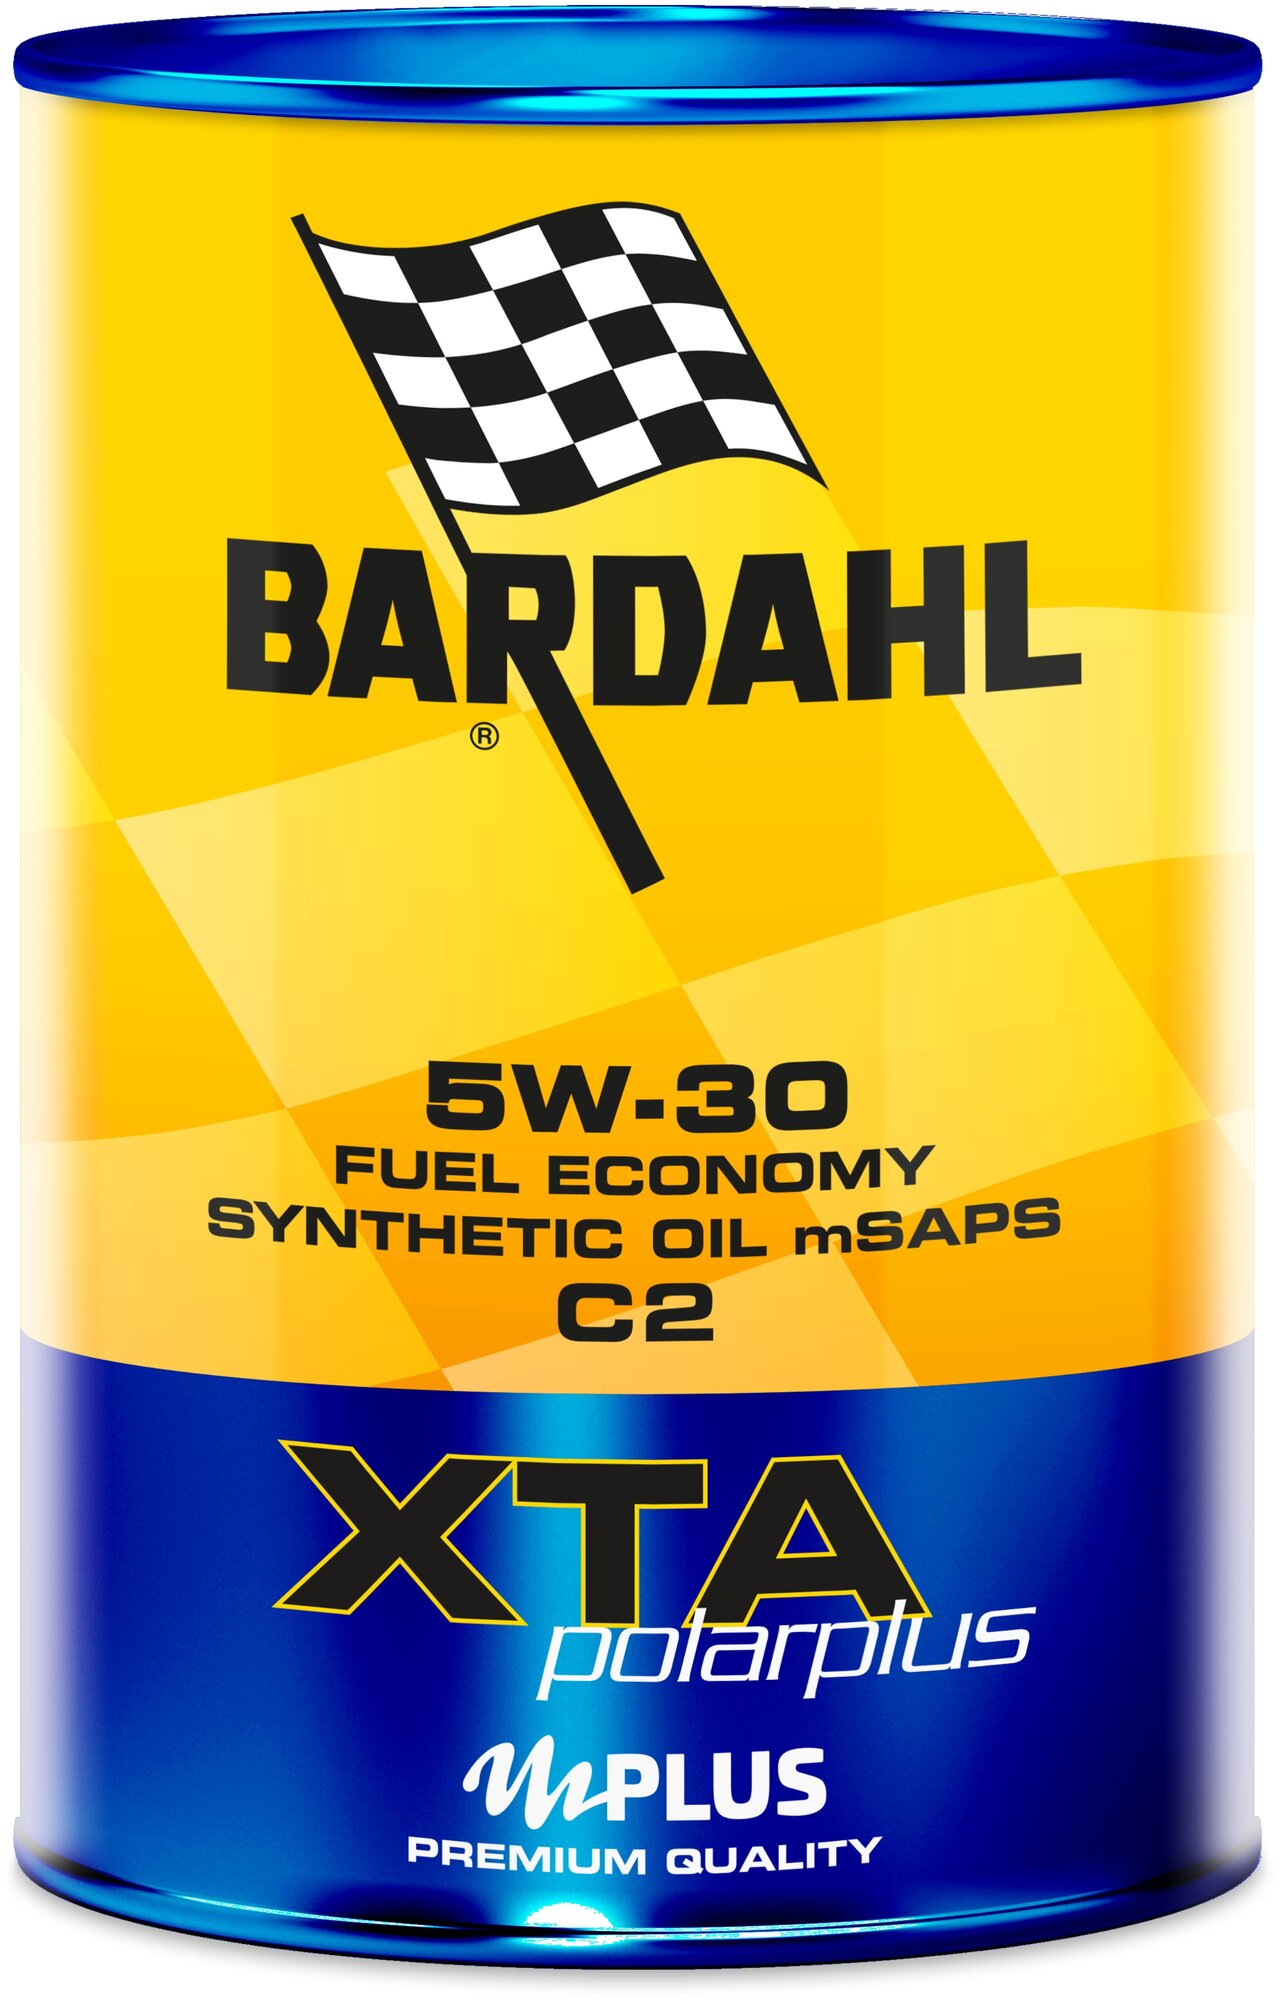 Синтетическое моторное масло Bardahl XTA Polarplus 5W-30 Fuel Economy Synthetic Oil mSAPS